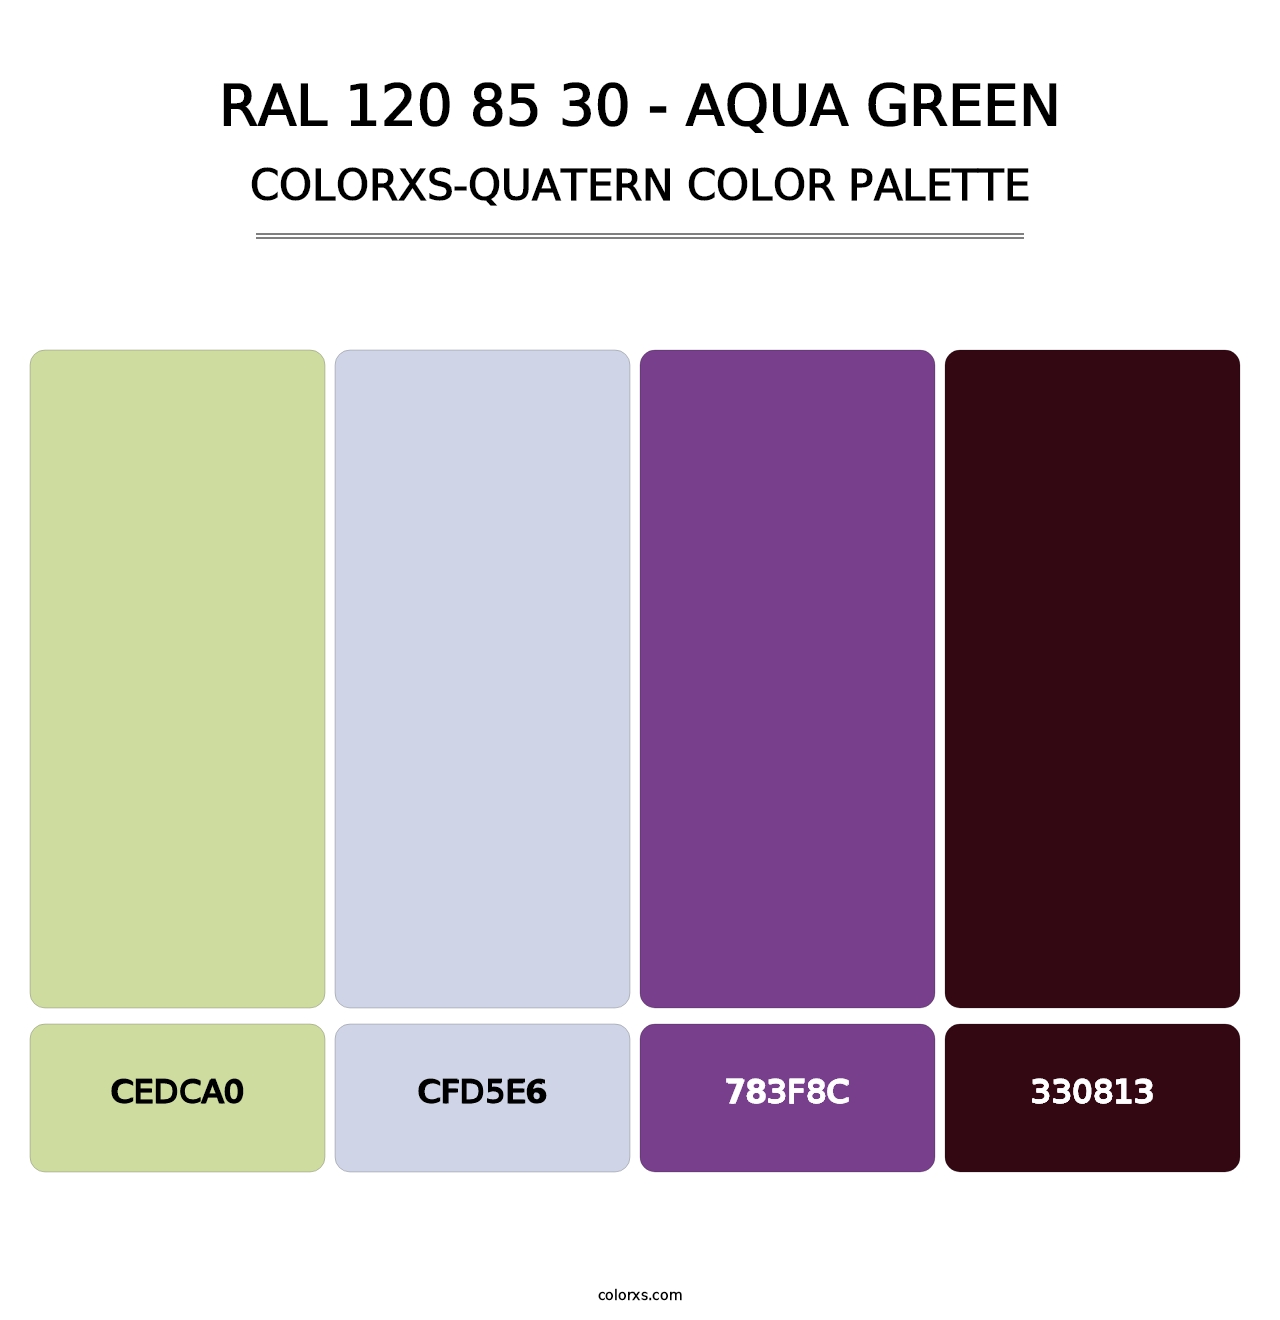 RAL 120 85 30 - Aqua Green - Colorxs Quatern Palette